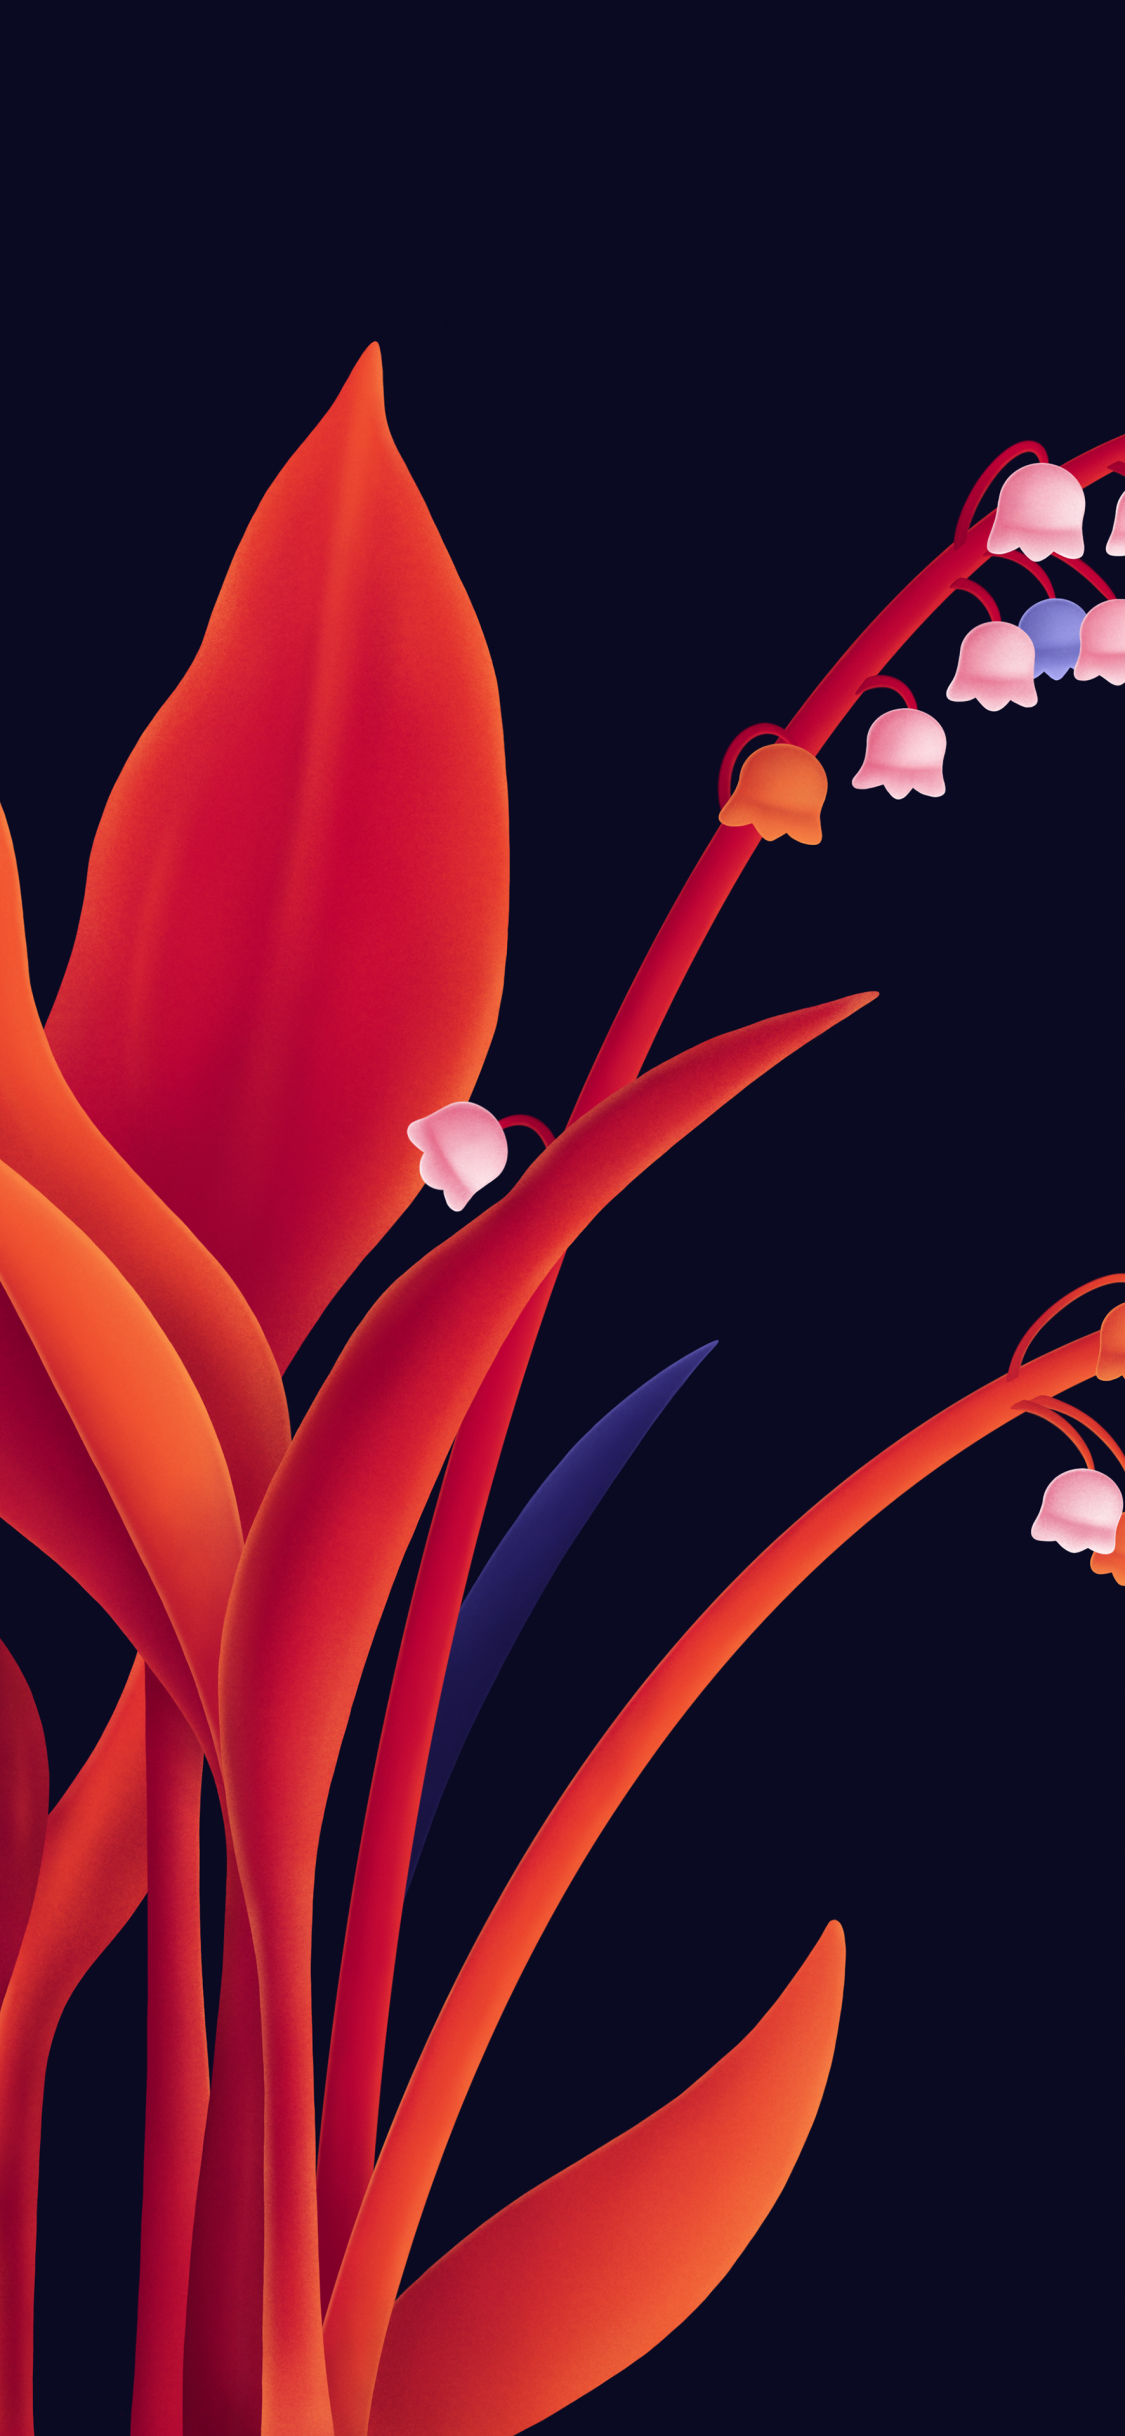 Lily Flowers Wallpaper 4k Digital Art